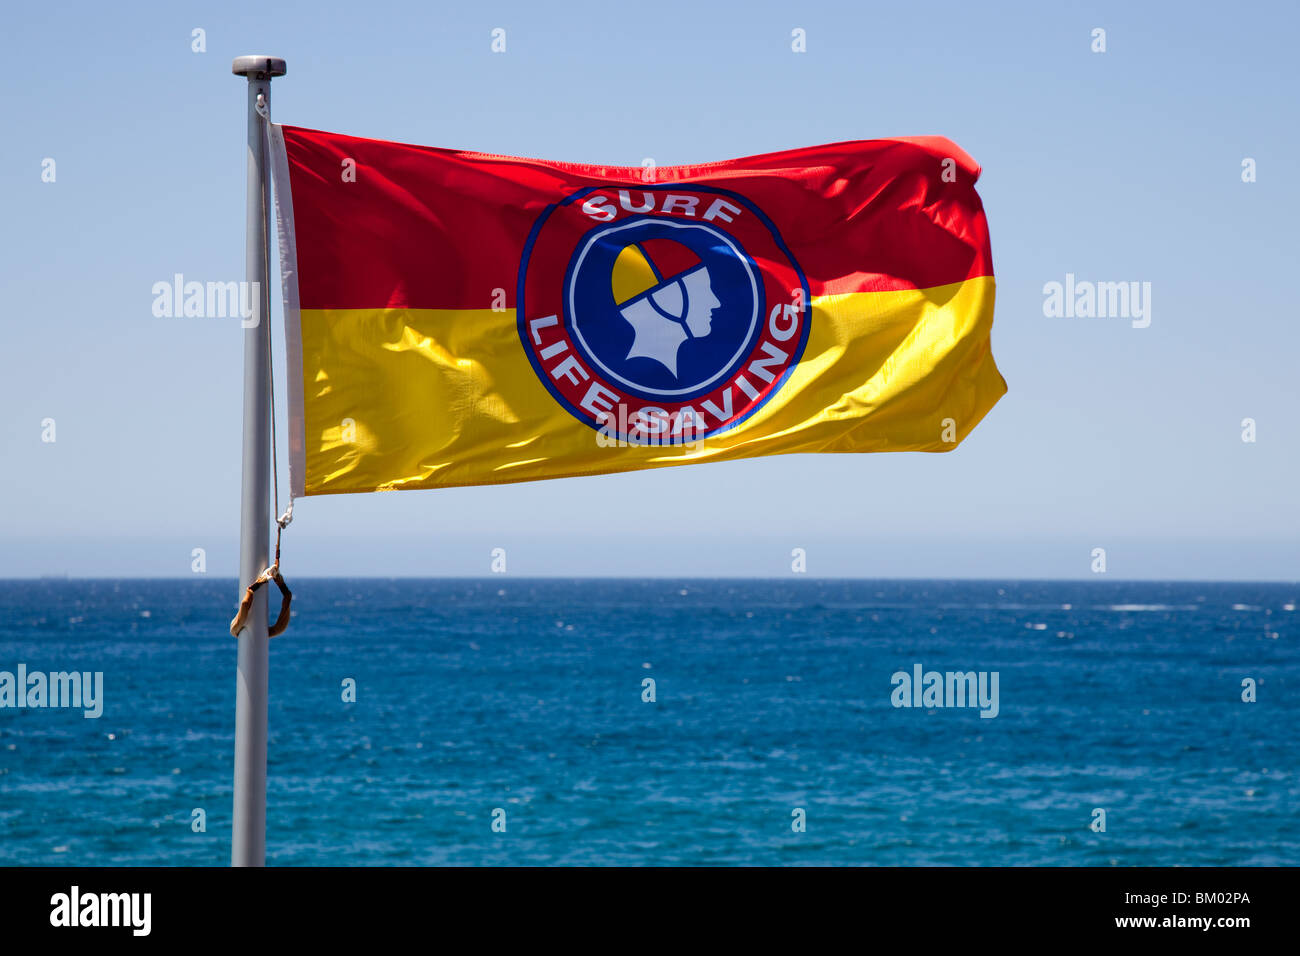 A surf life saving flag on Bondi Beach, Sydney coastline. Stock Photo